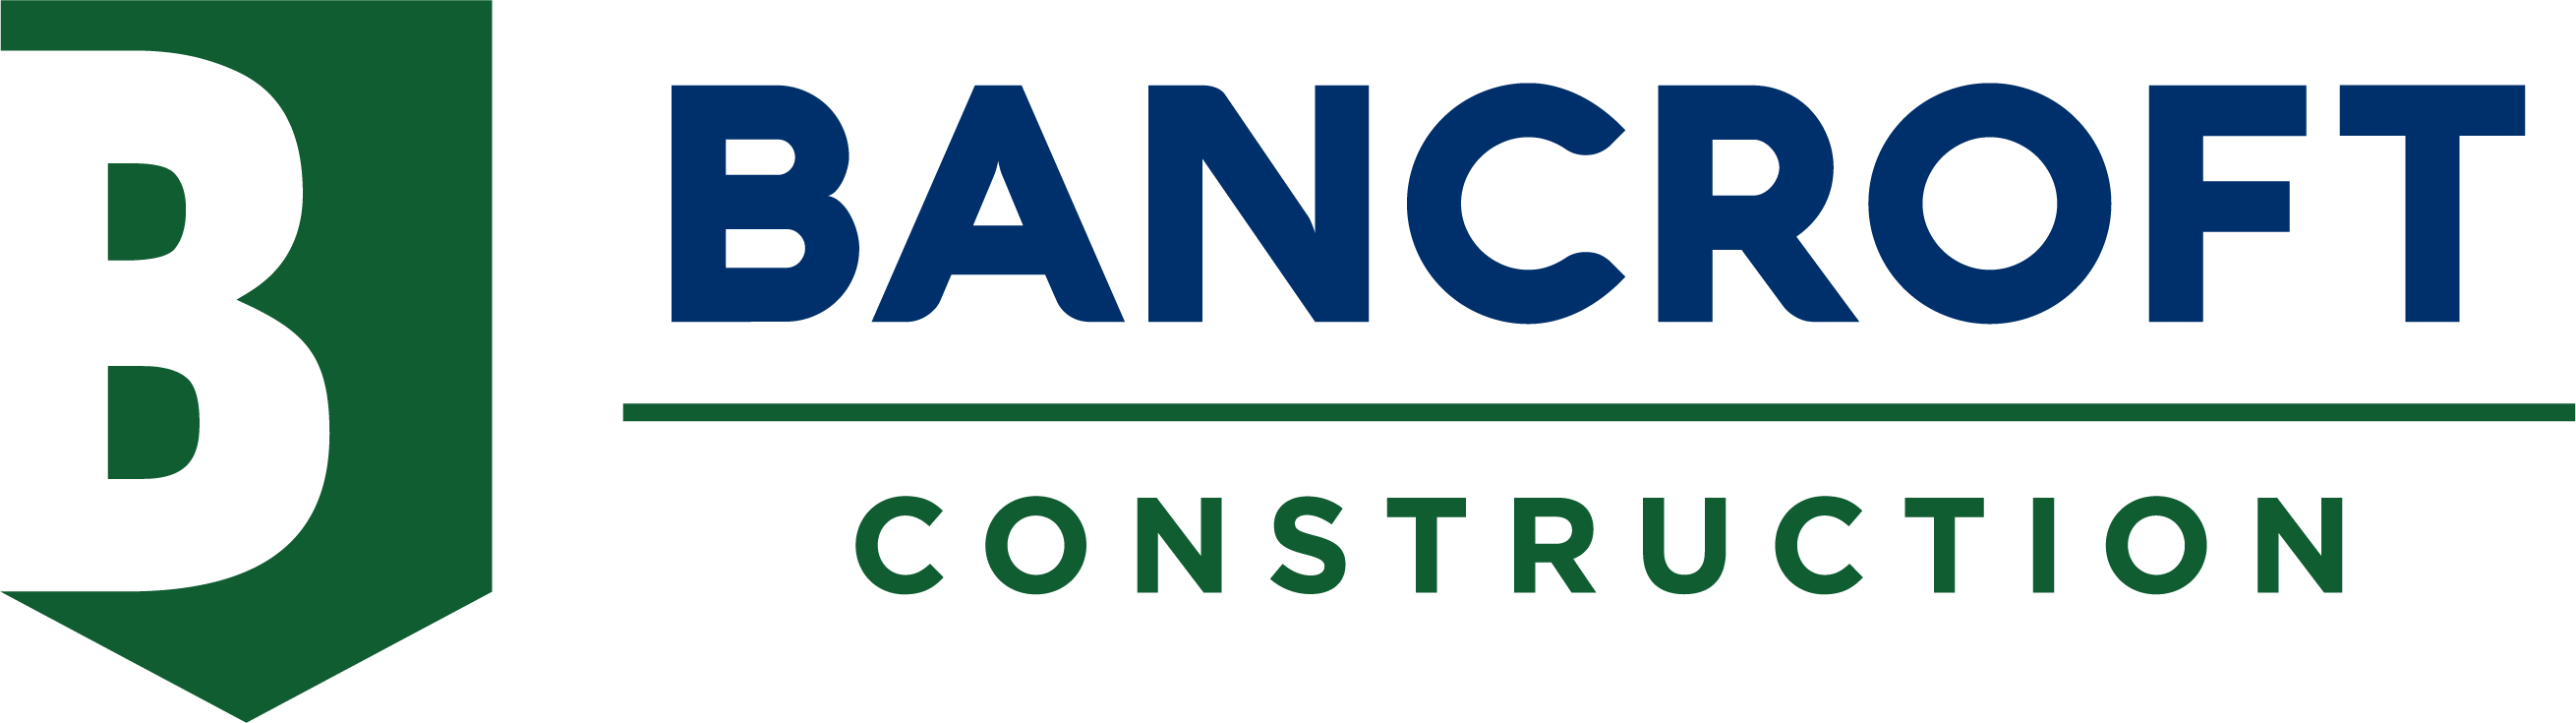 Bancroft Construction logo